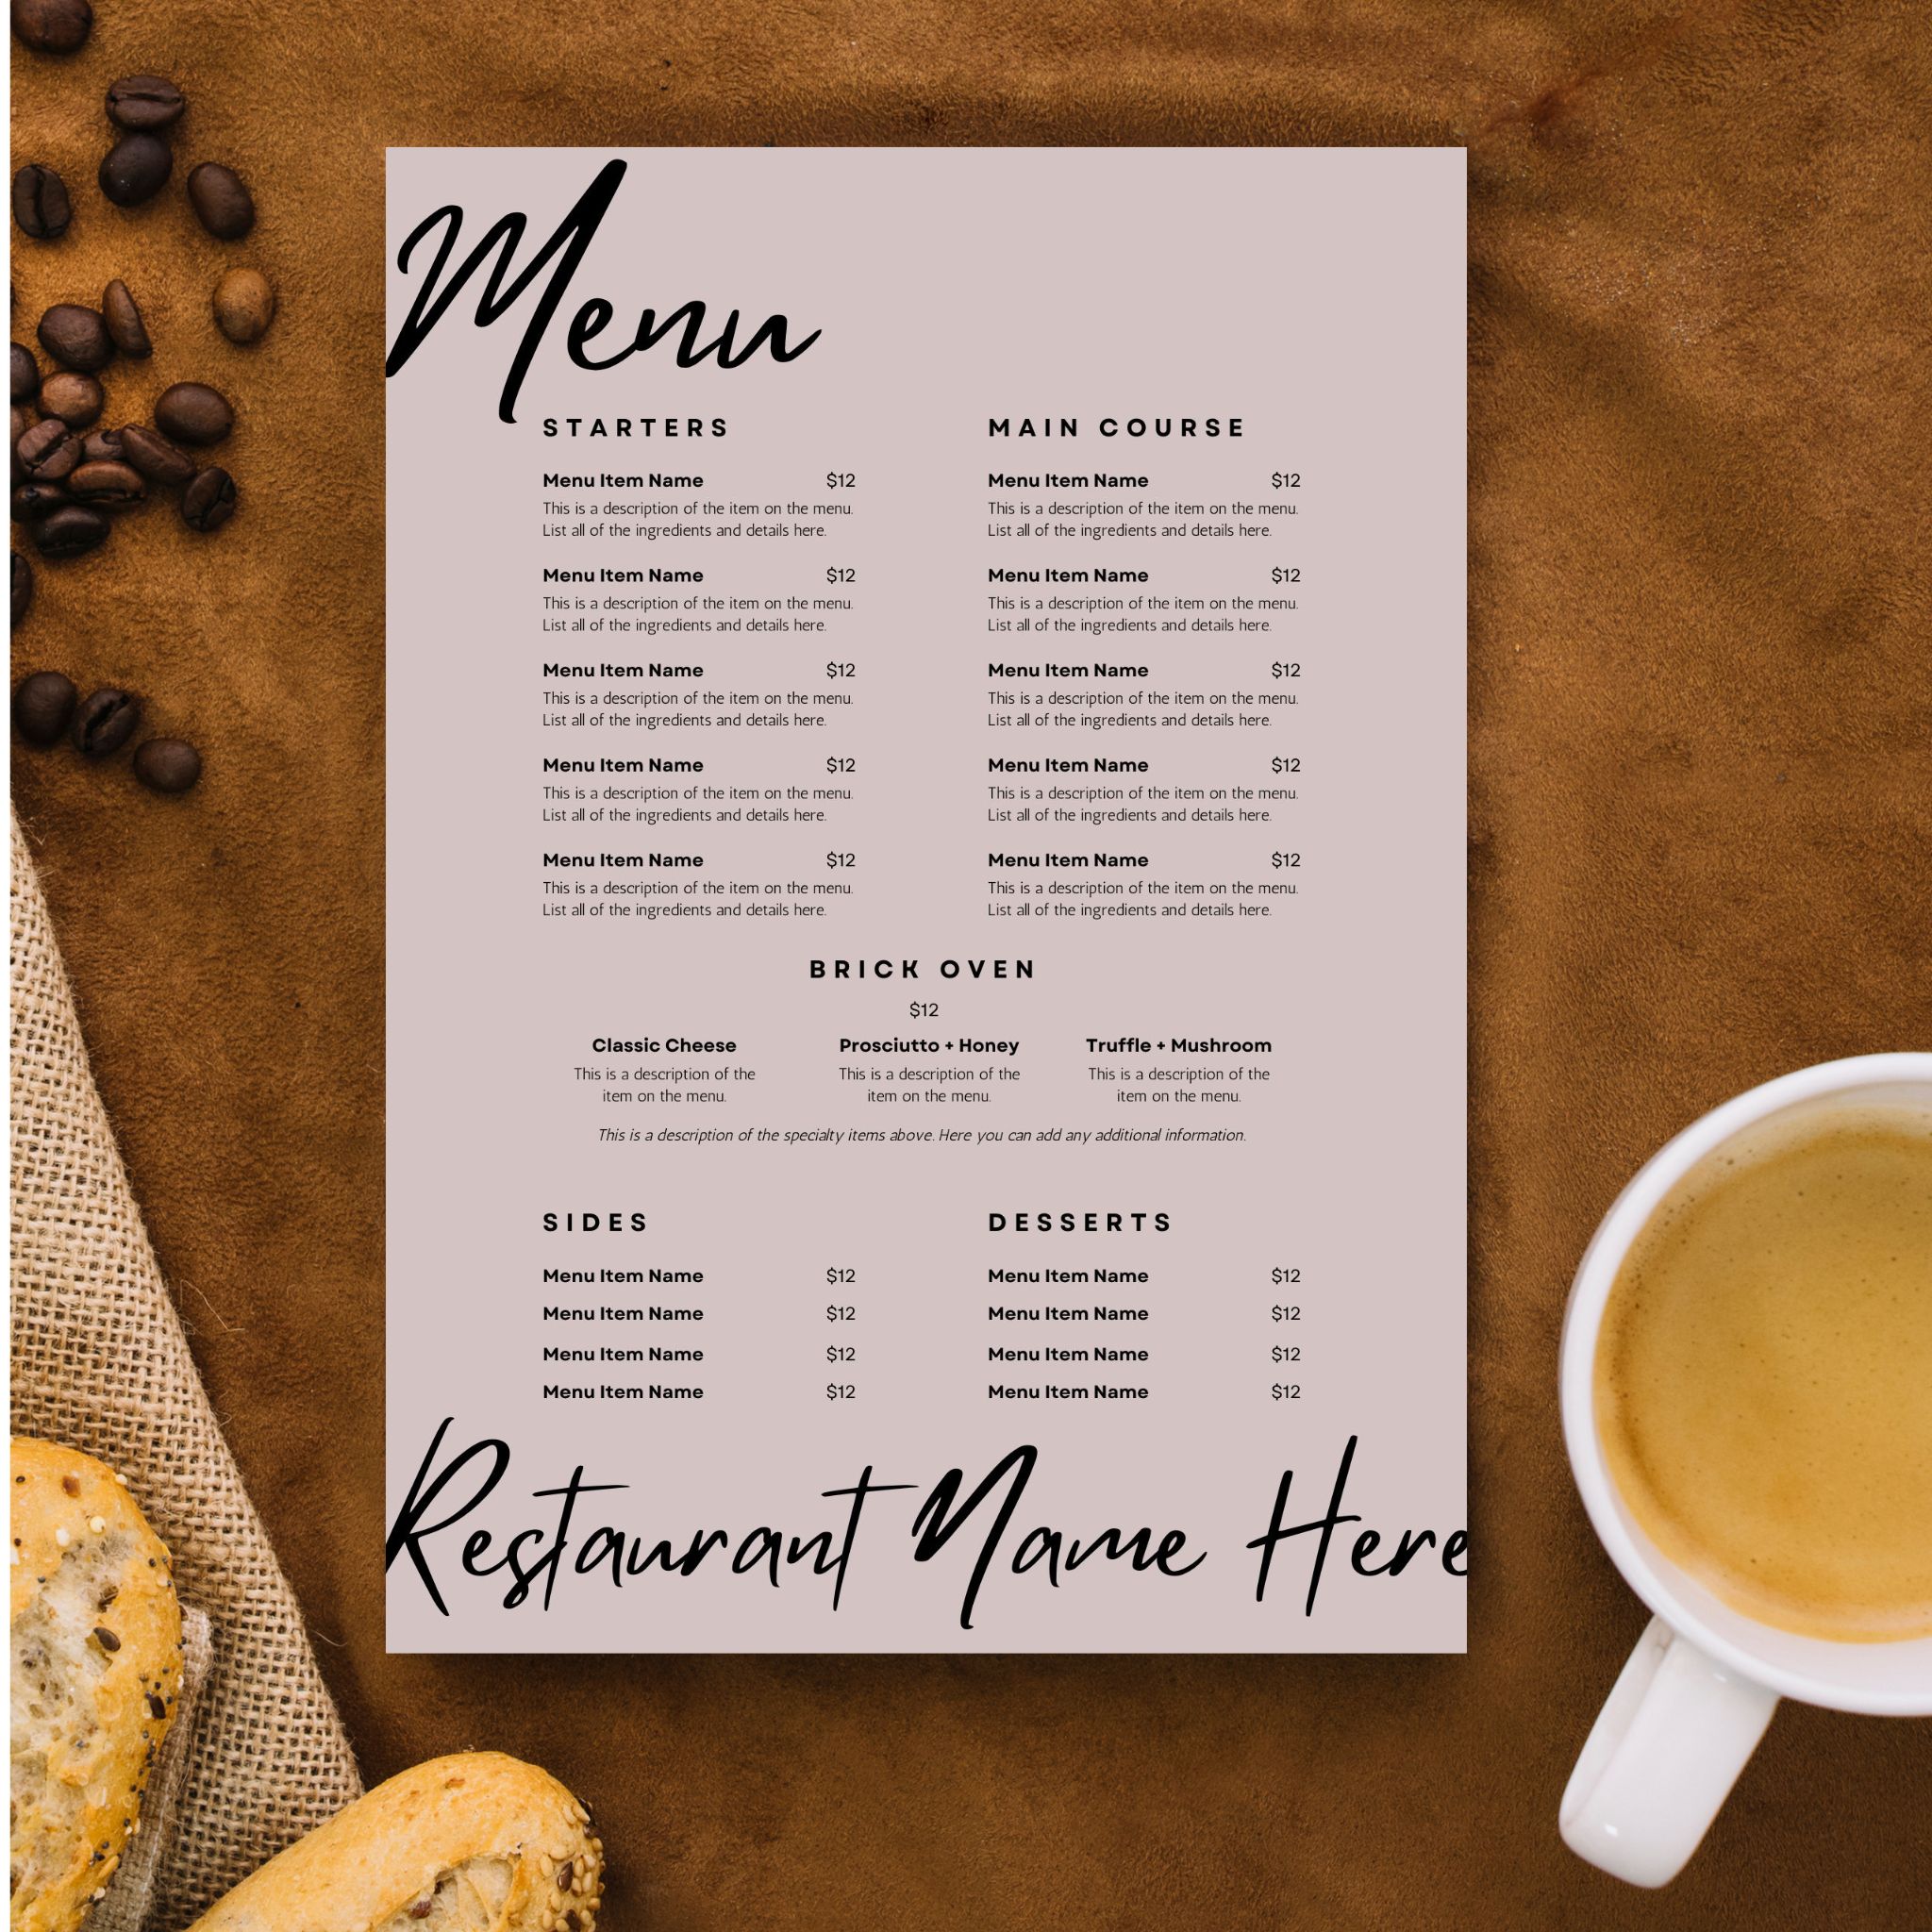 coffee shop menu design templates